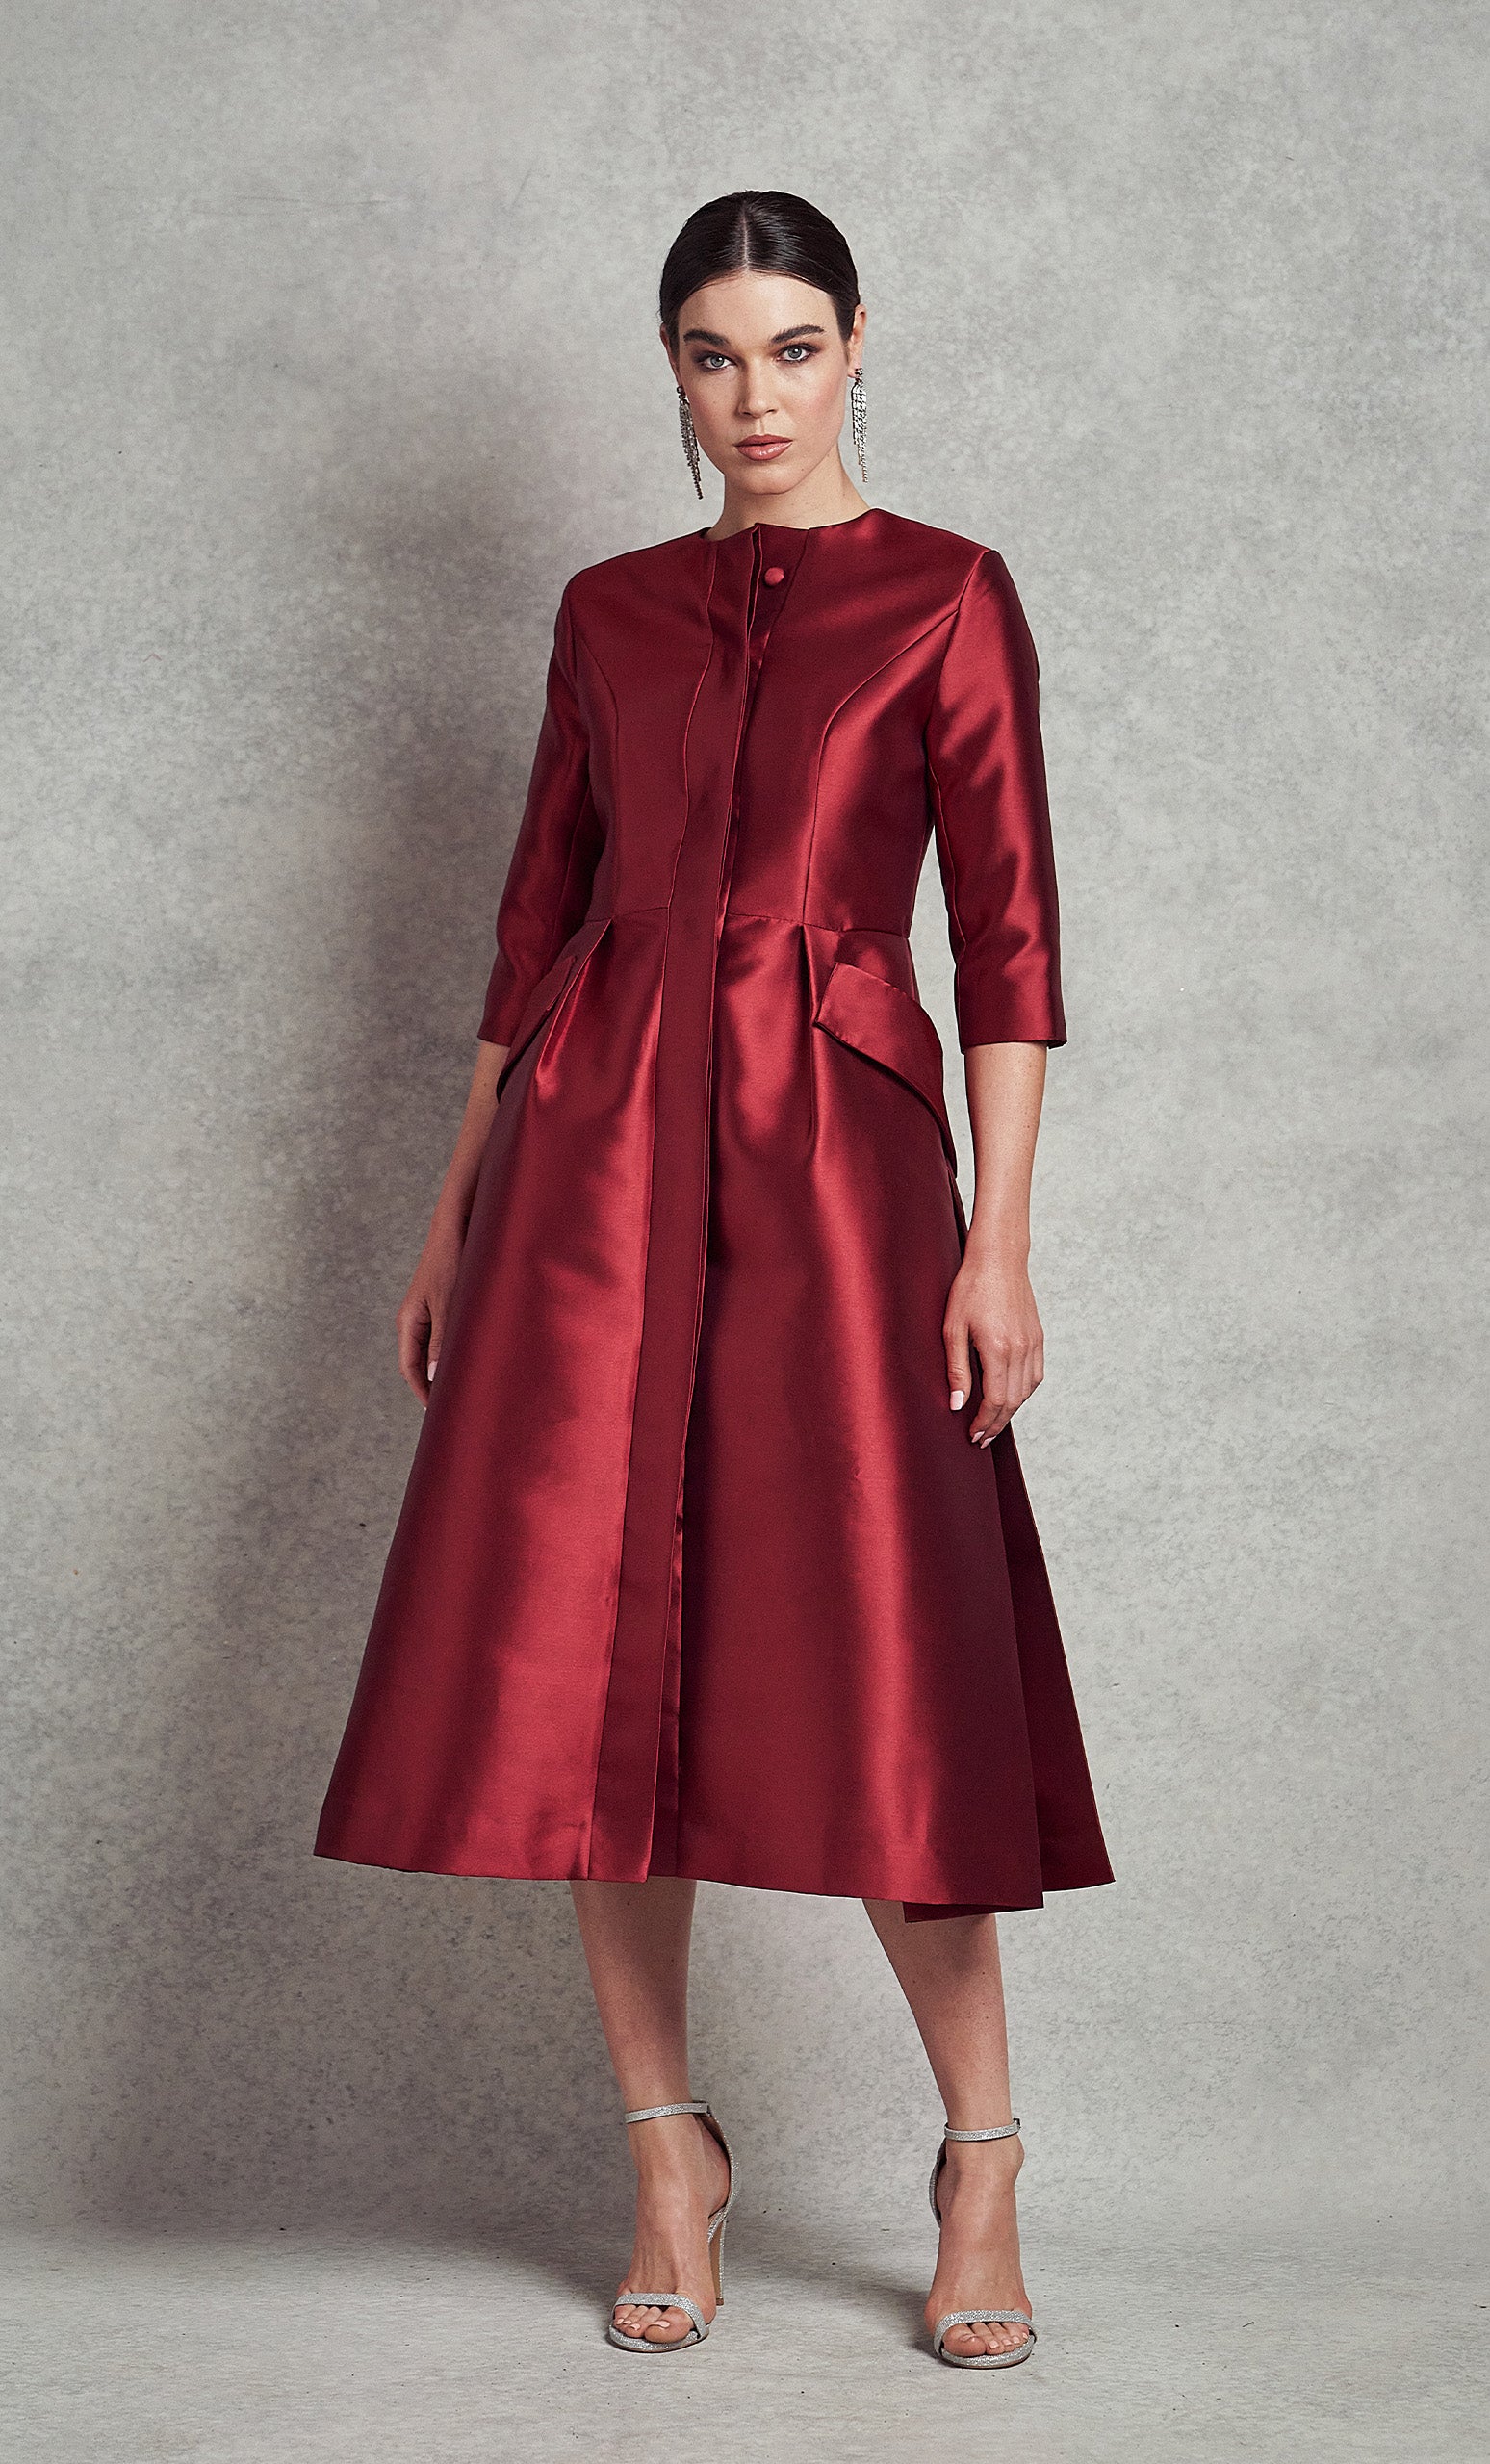 Jackie O Dress Coat - Wine Red